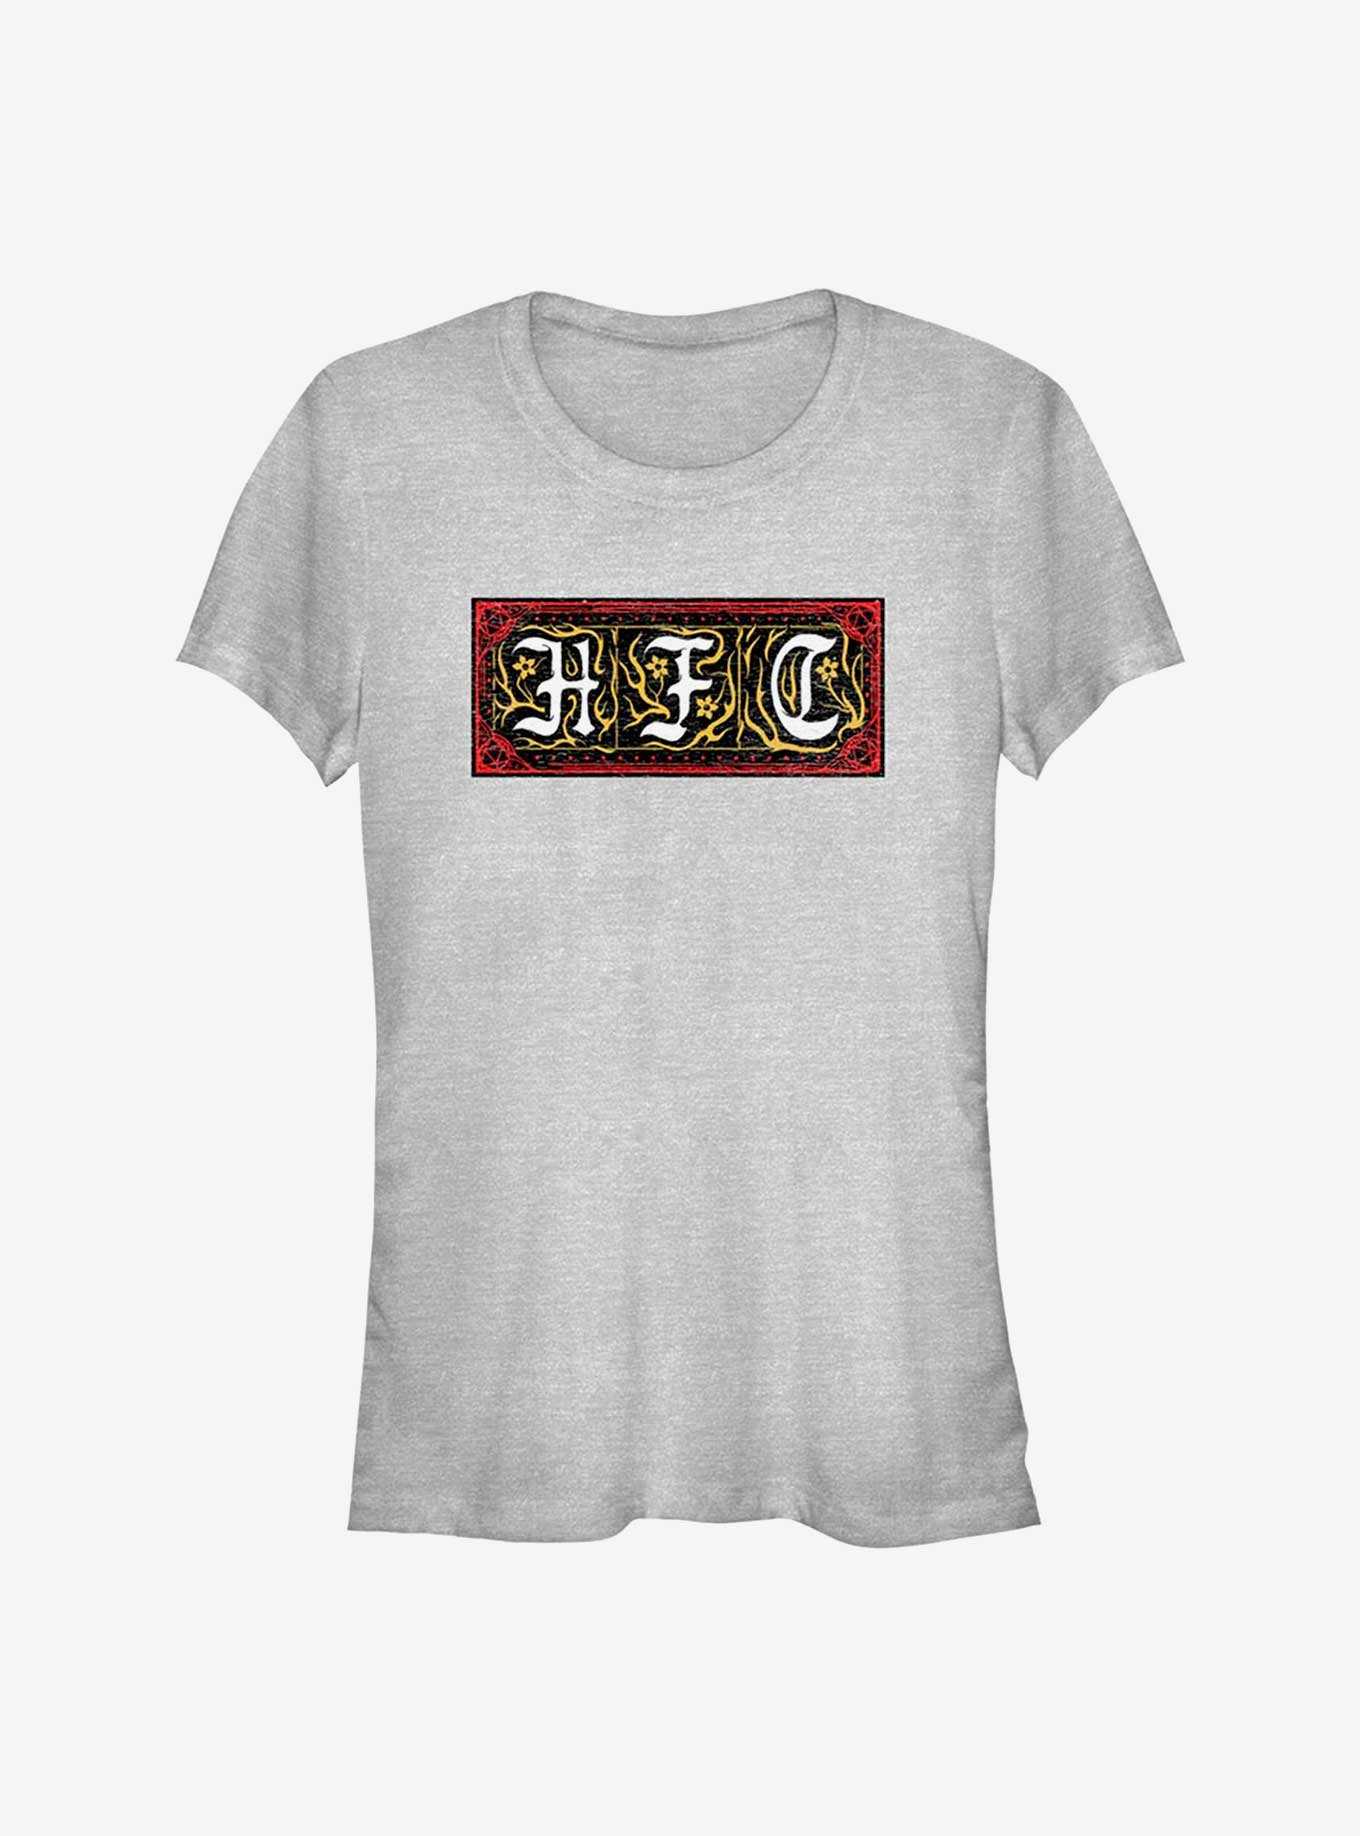 Stranger Things HFC Emblem Girls T-Shirt, , hi-res